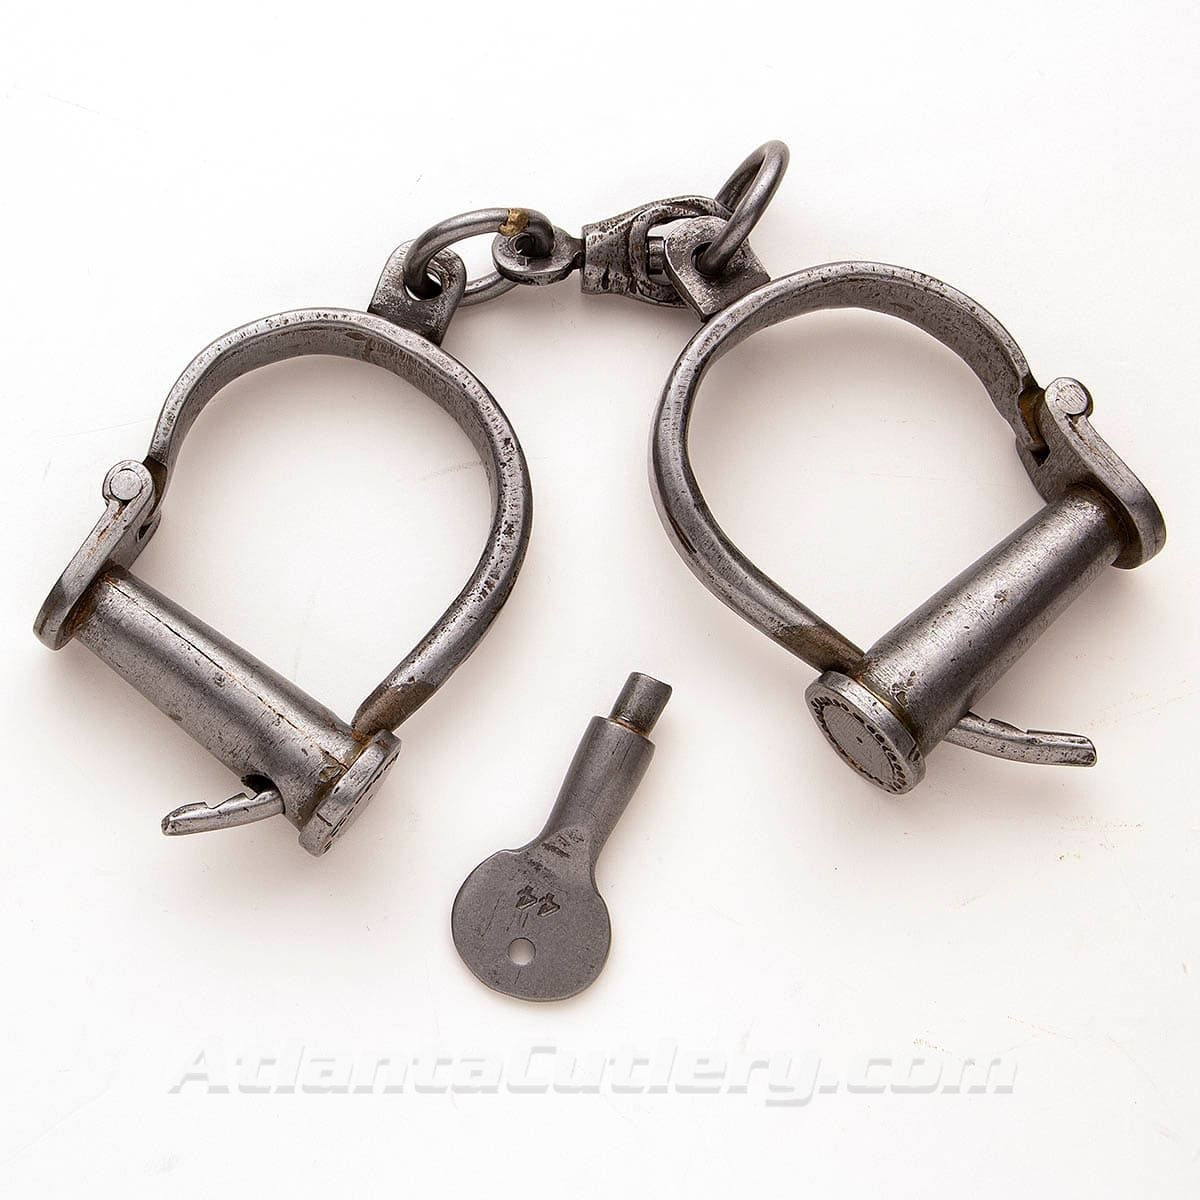 Iron Handcuffs with Key